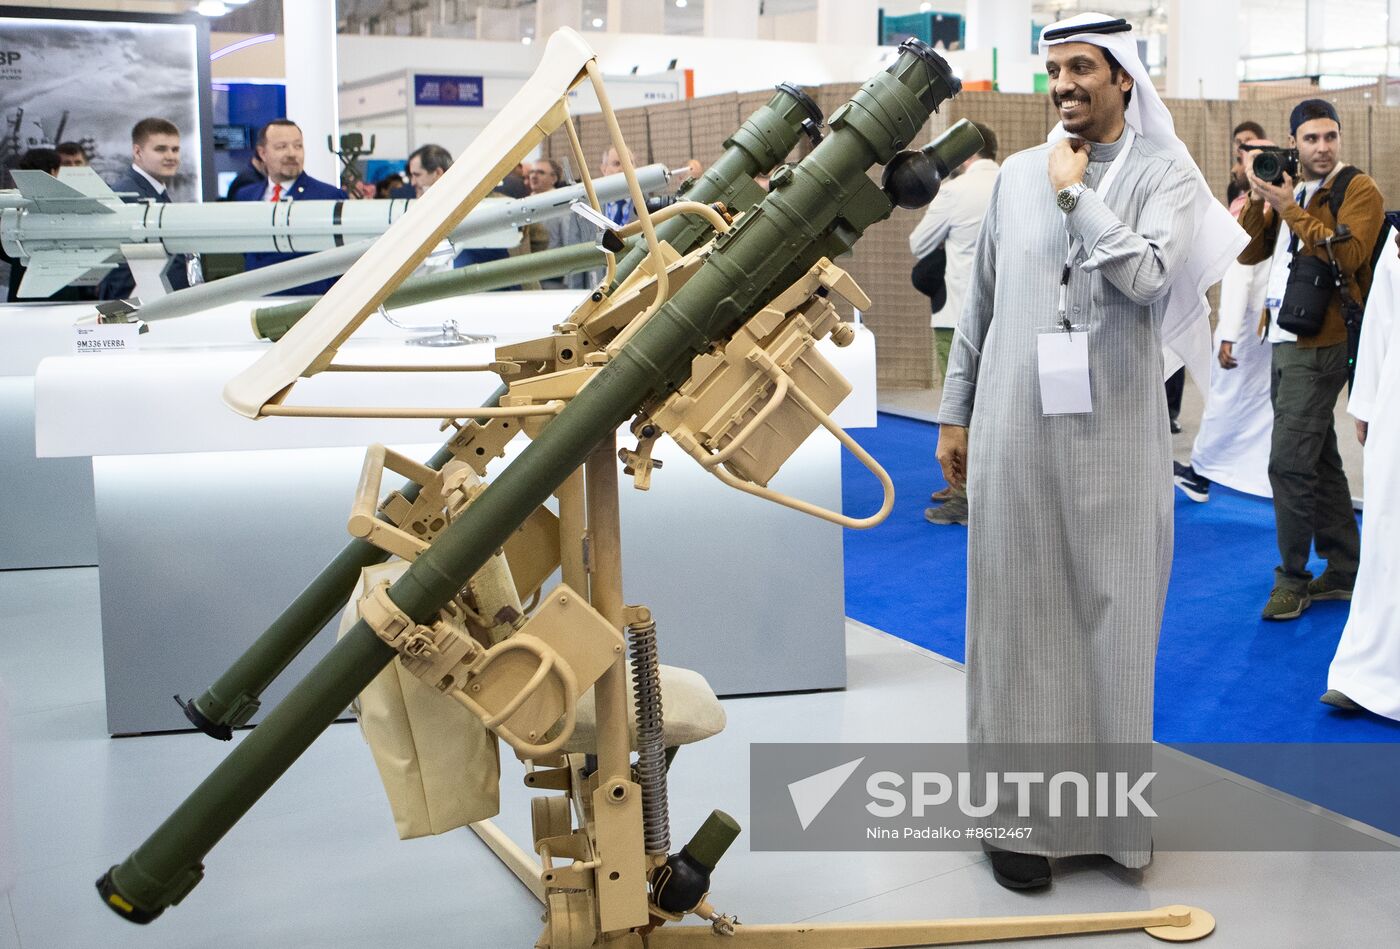 Saudi Arabia World Defense Show